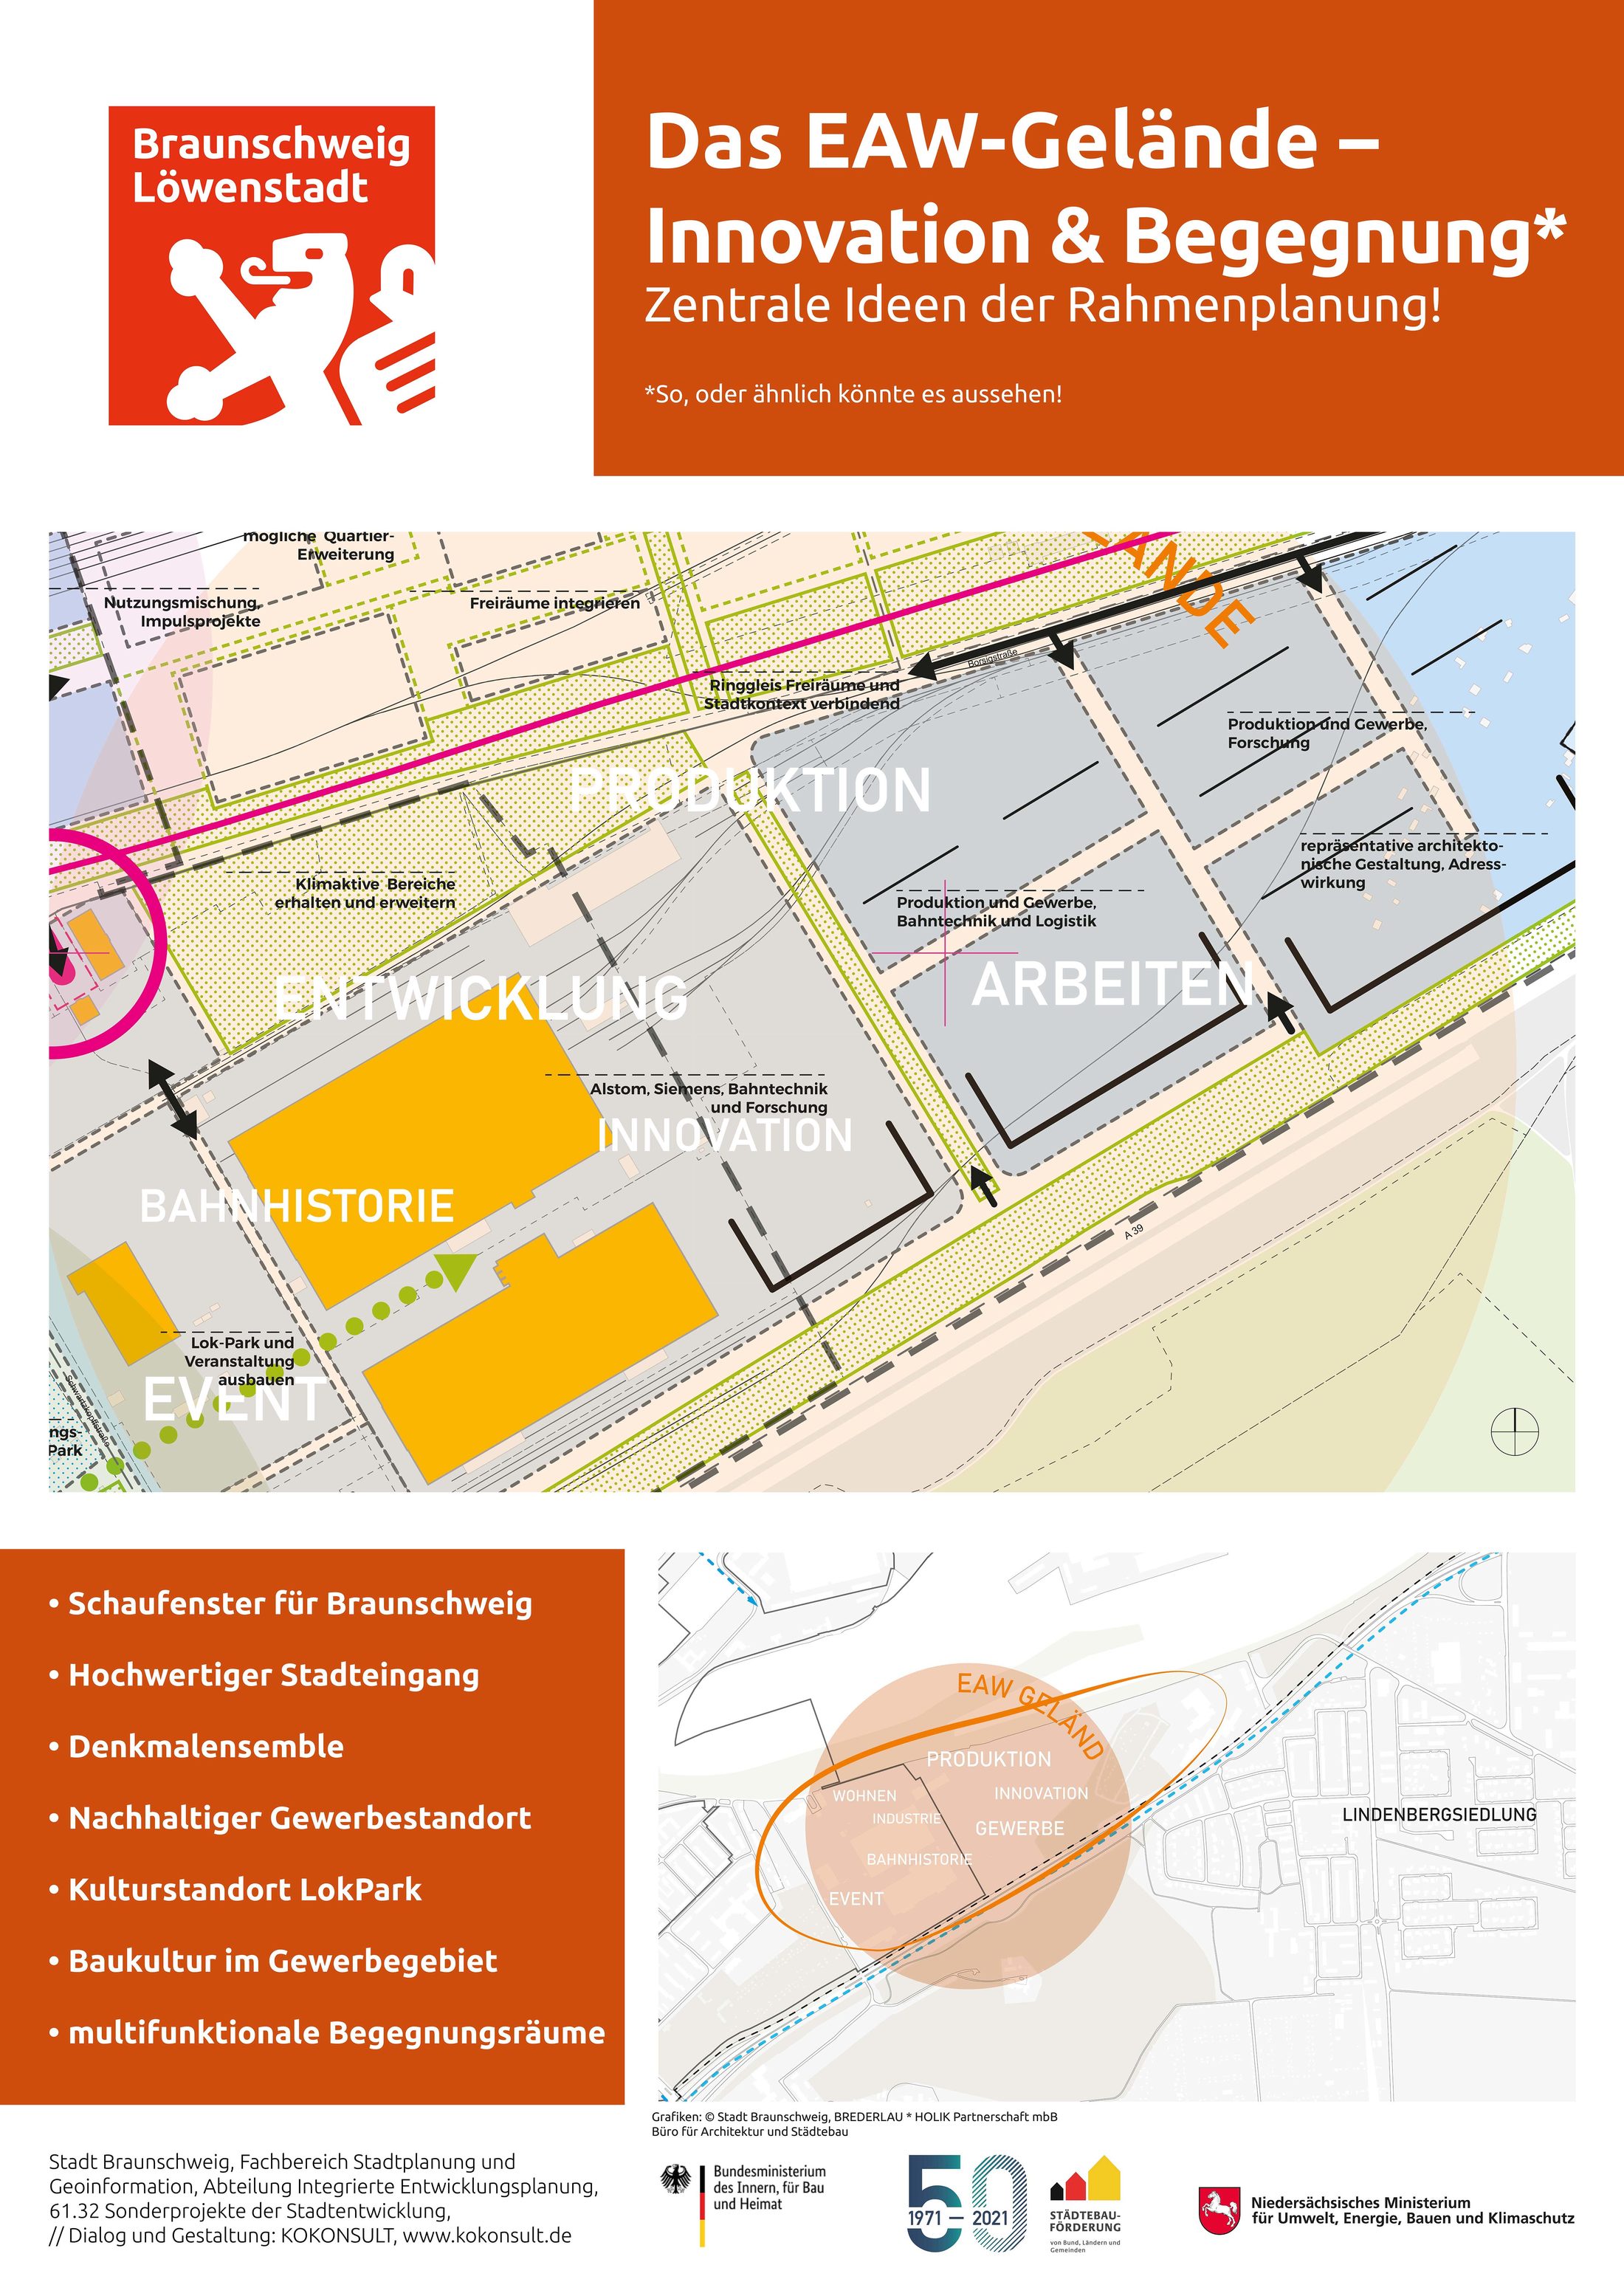 Plakat "Das EAW-Gelände - Innovation & Begegnung - Zentrale Ideen des Rahmenplans" (Wird bei Klick vergrößert)